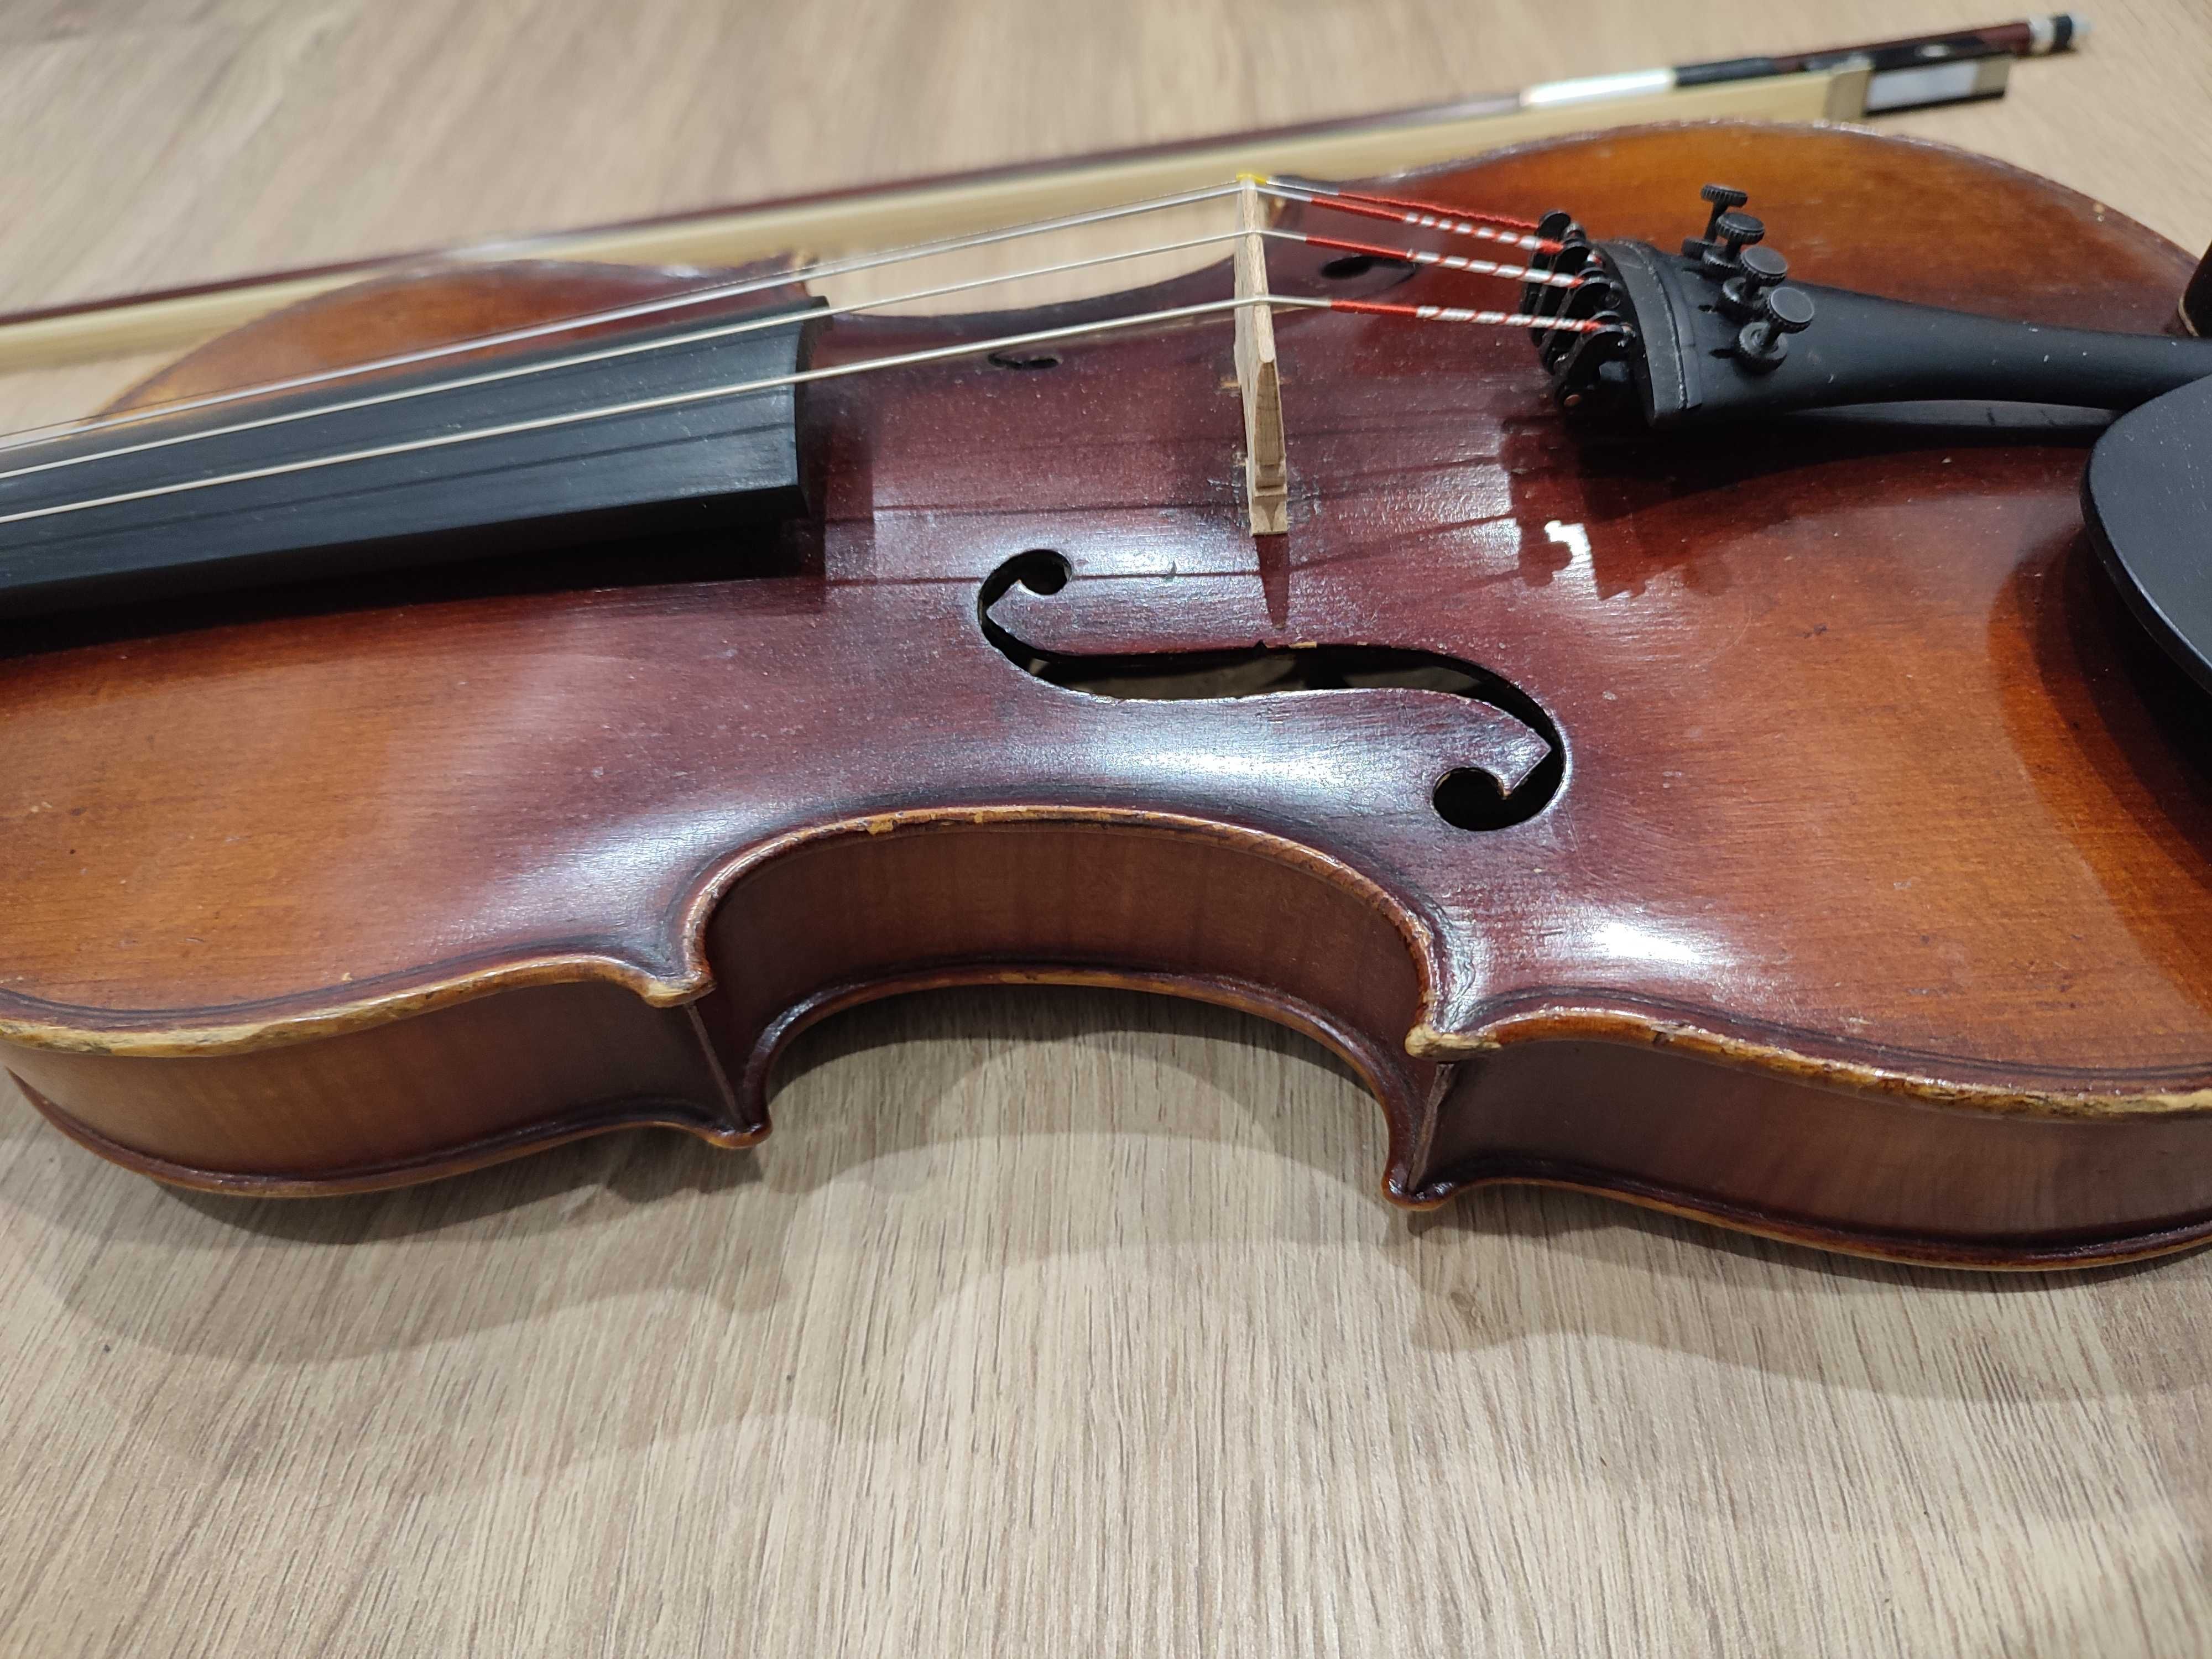 Skrzypce 4/4 Conservatory Violin